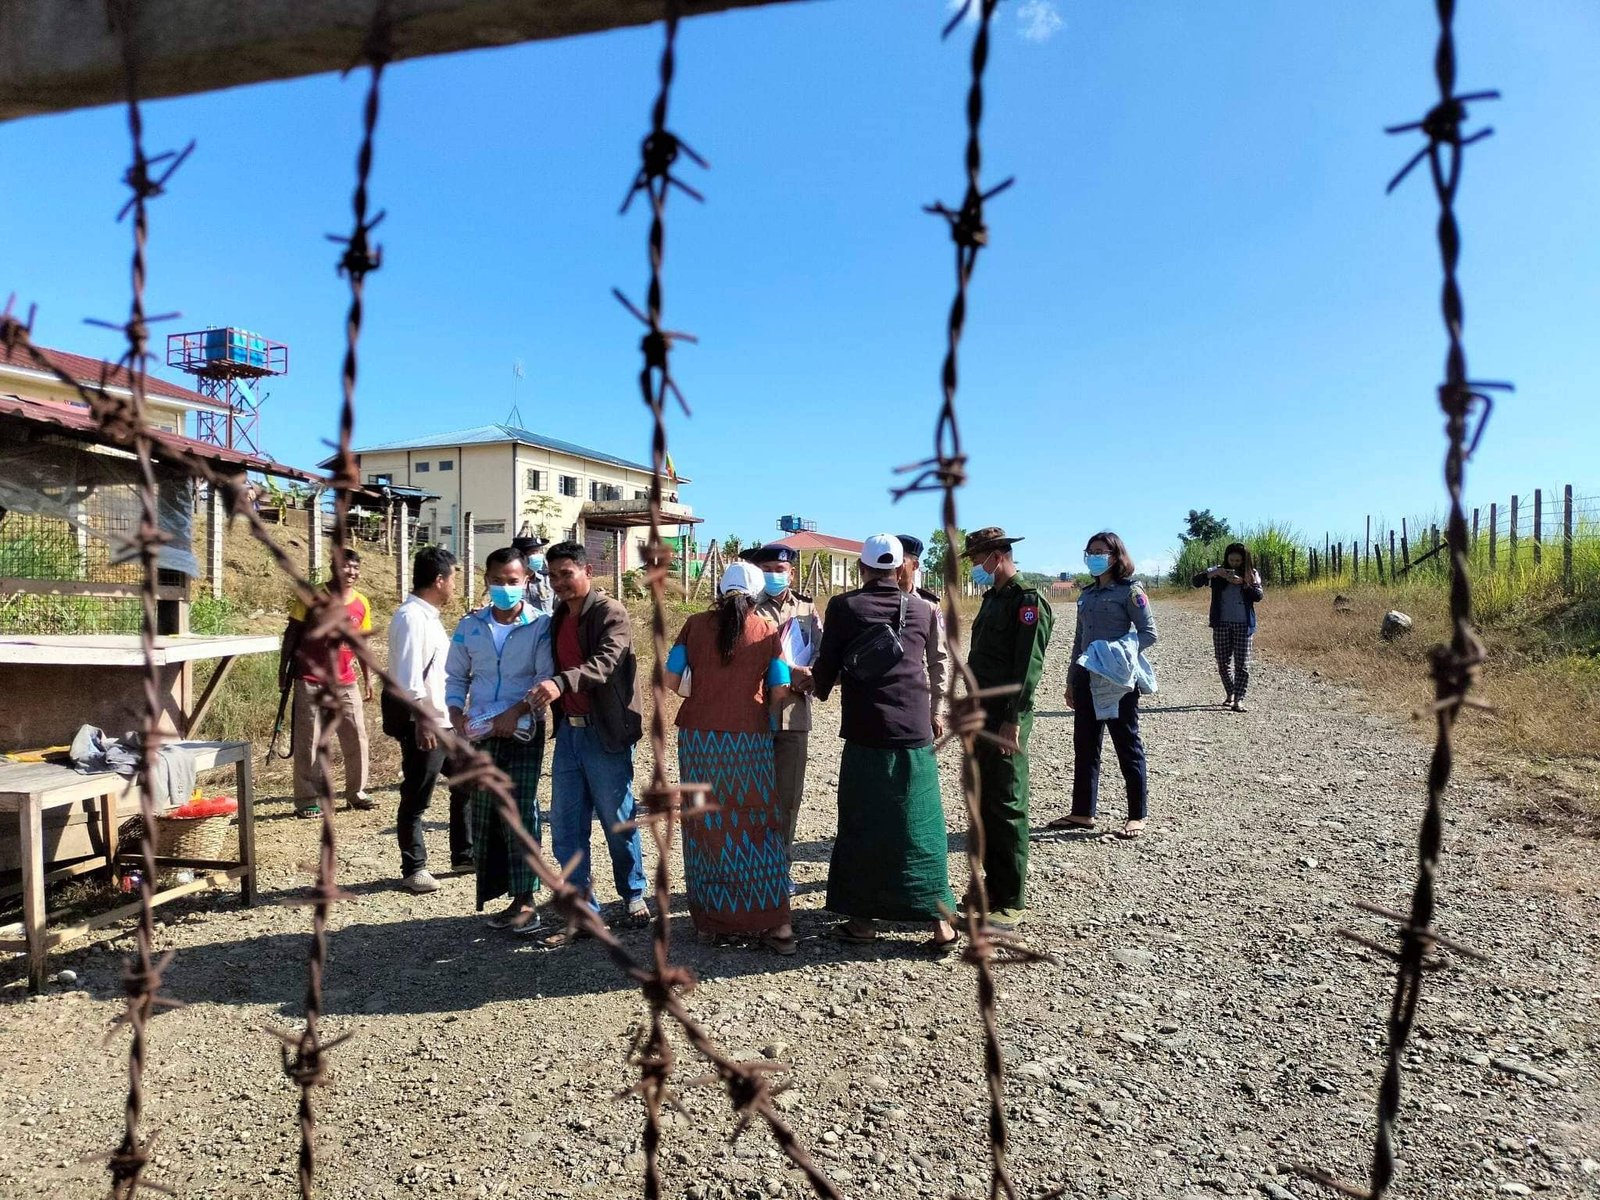 Junta Releases Political Prisoners In Kachin State